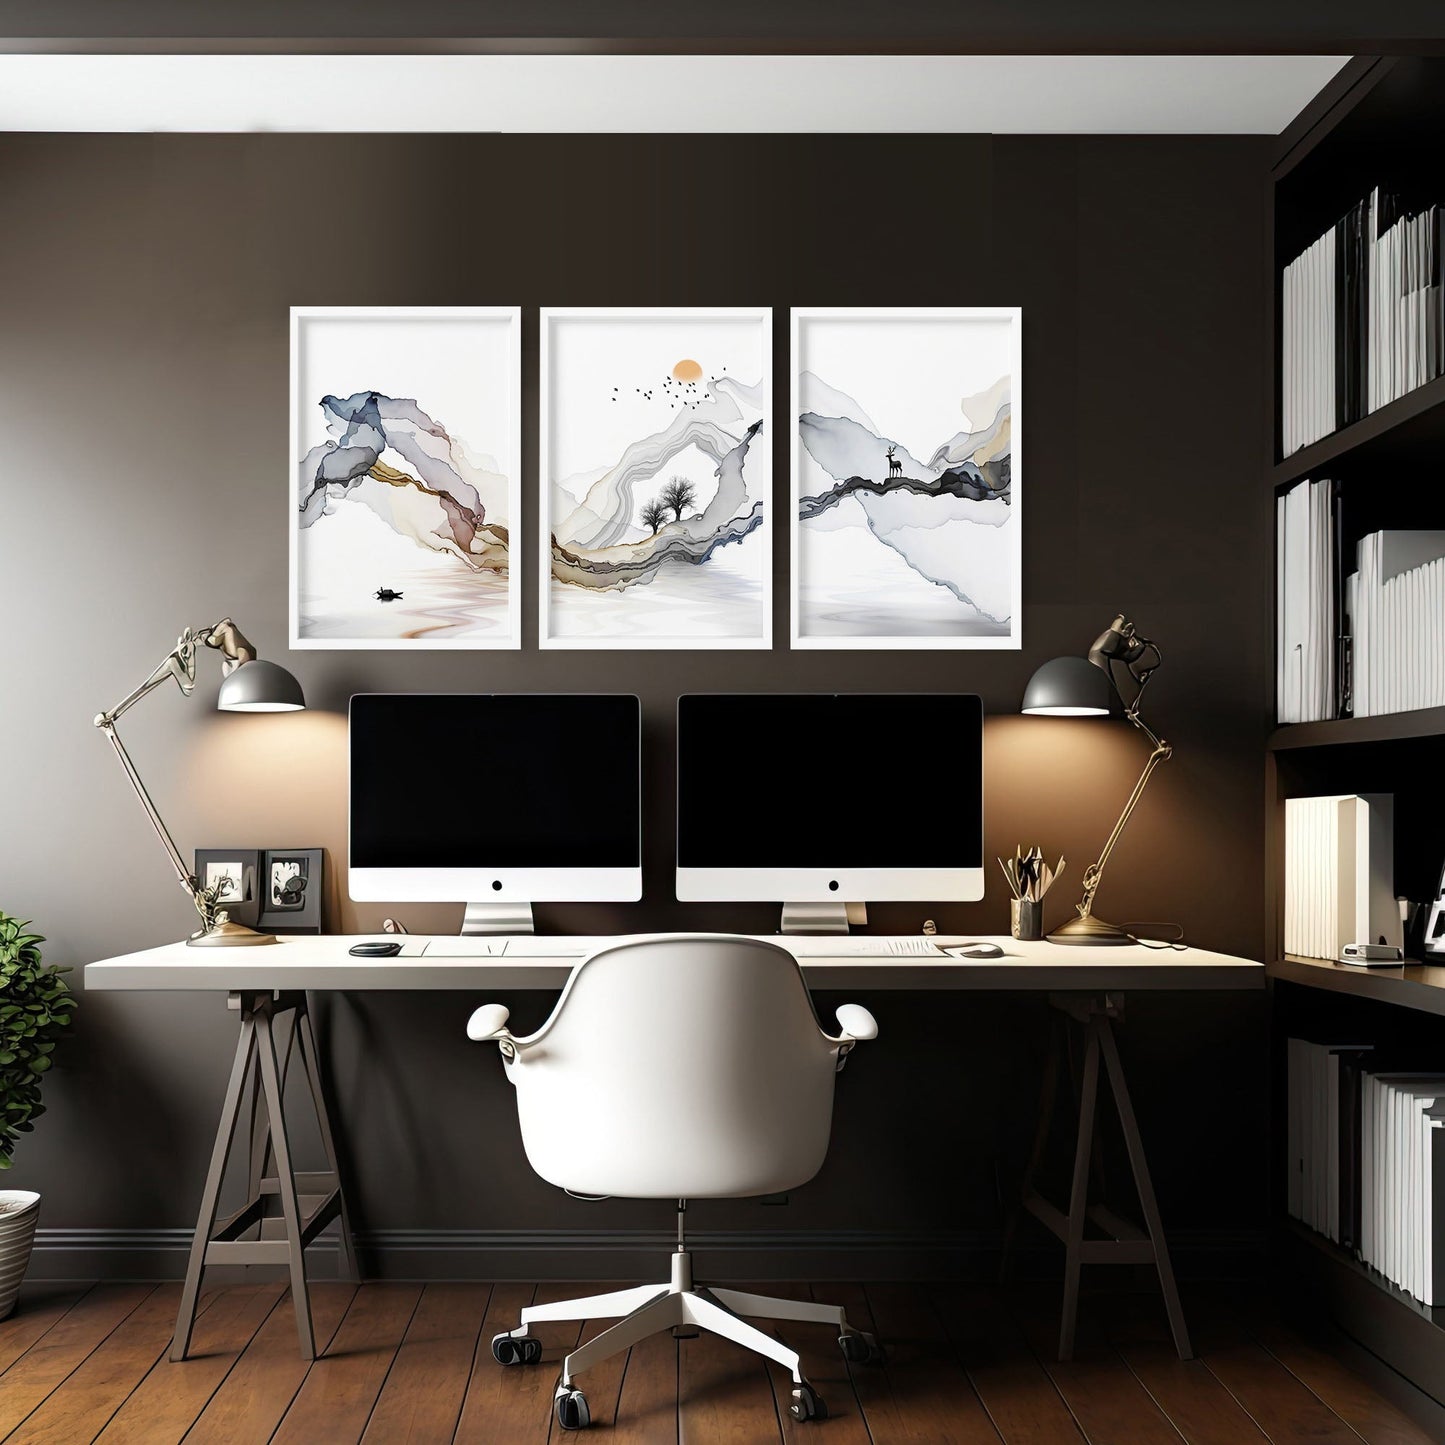 Home office wall decor | set of 3 wall art prints